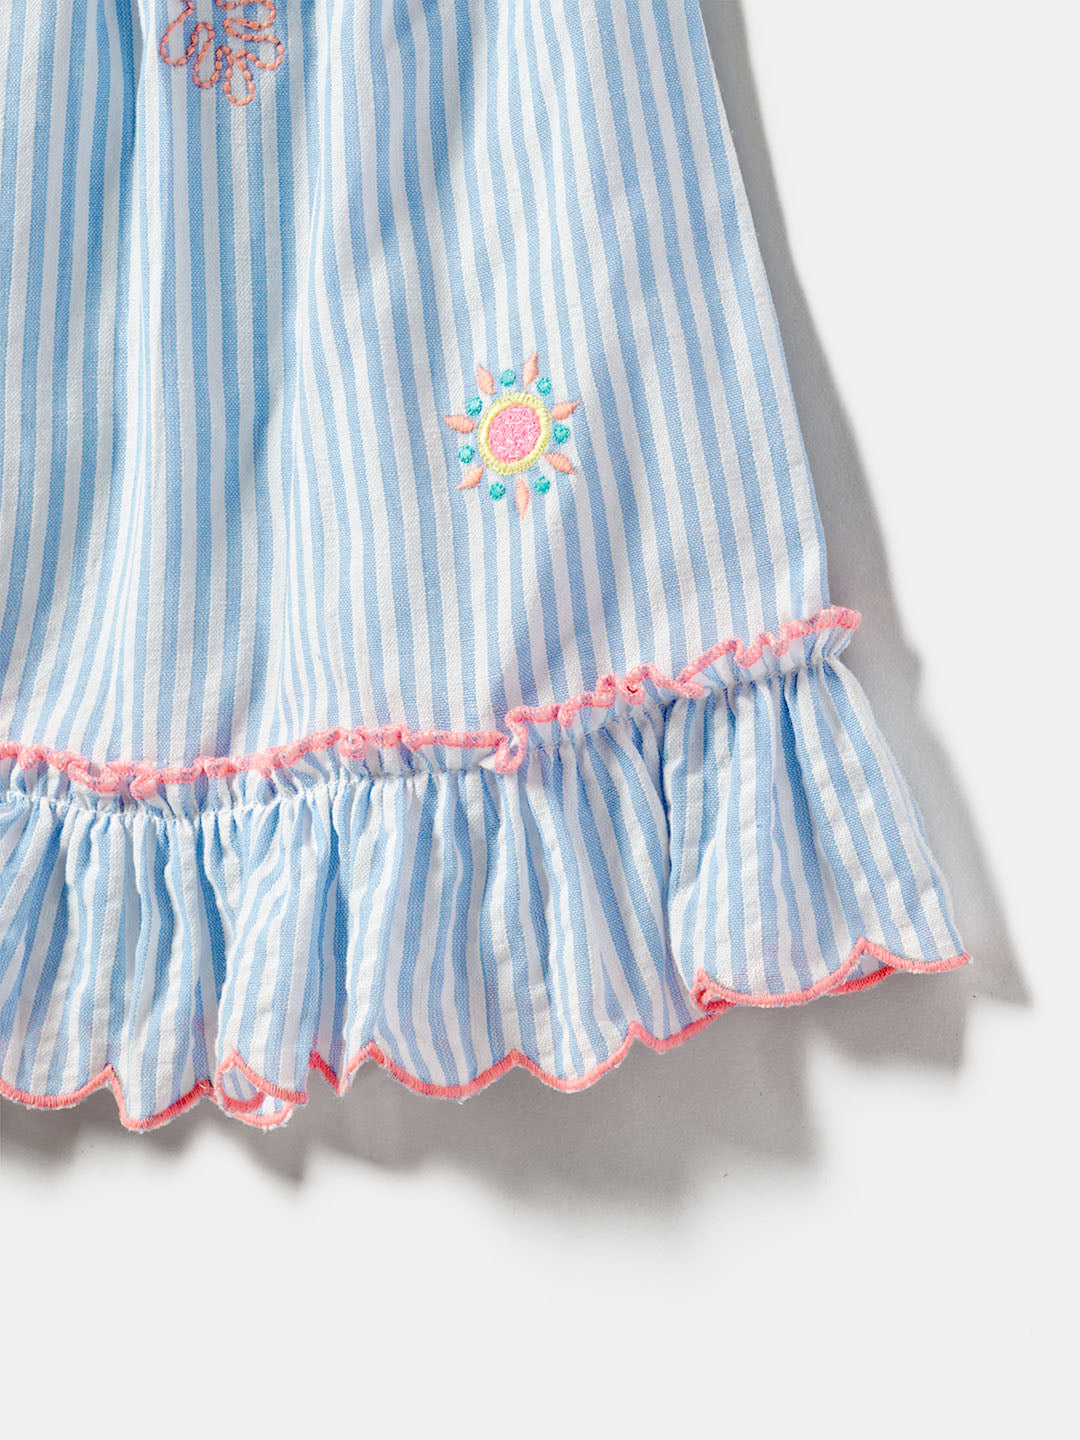 Nauti Nati Infant Girls Striped Shoulder Straps Smocked Pure Cotton A-Line Dress